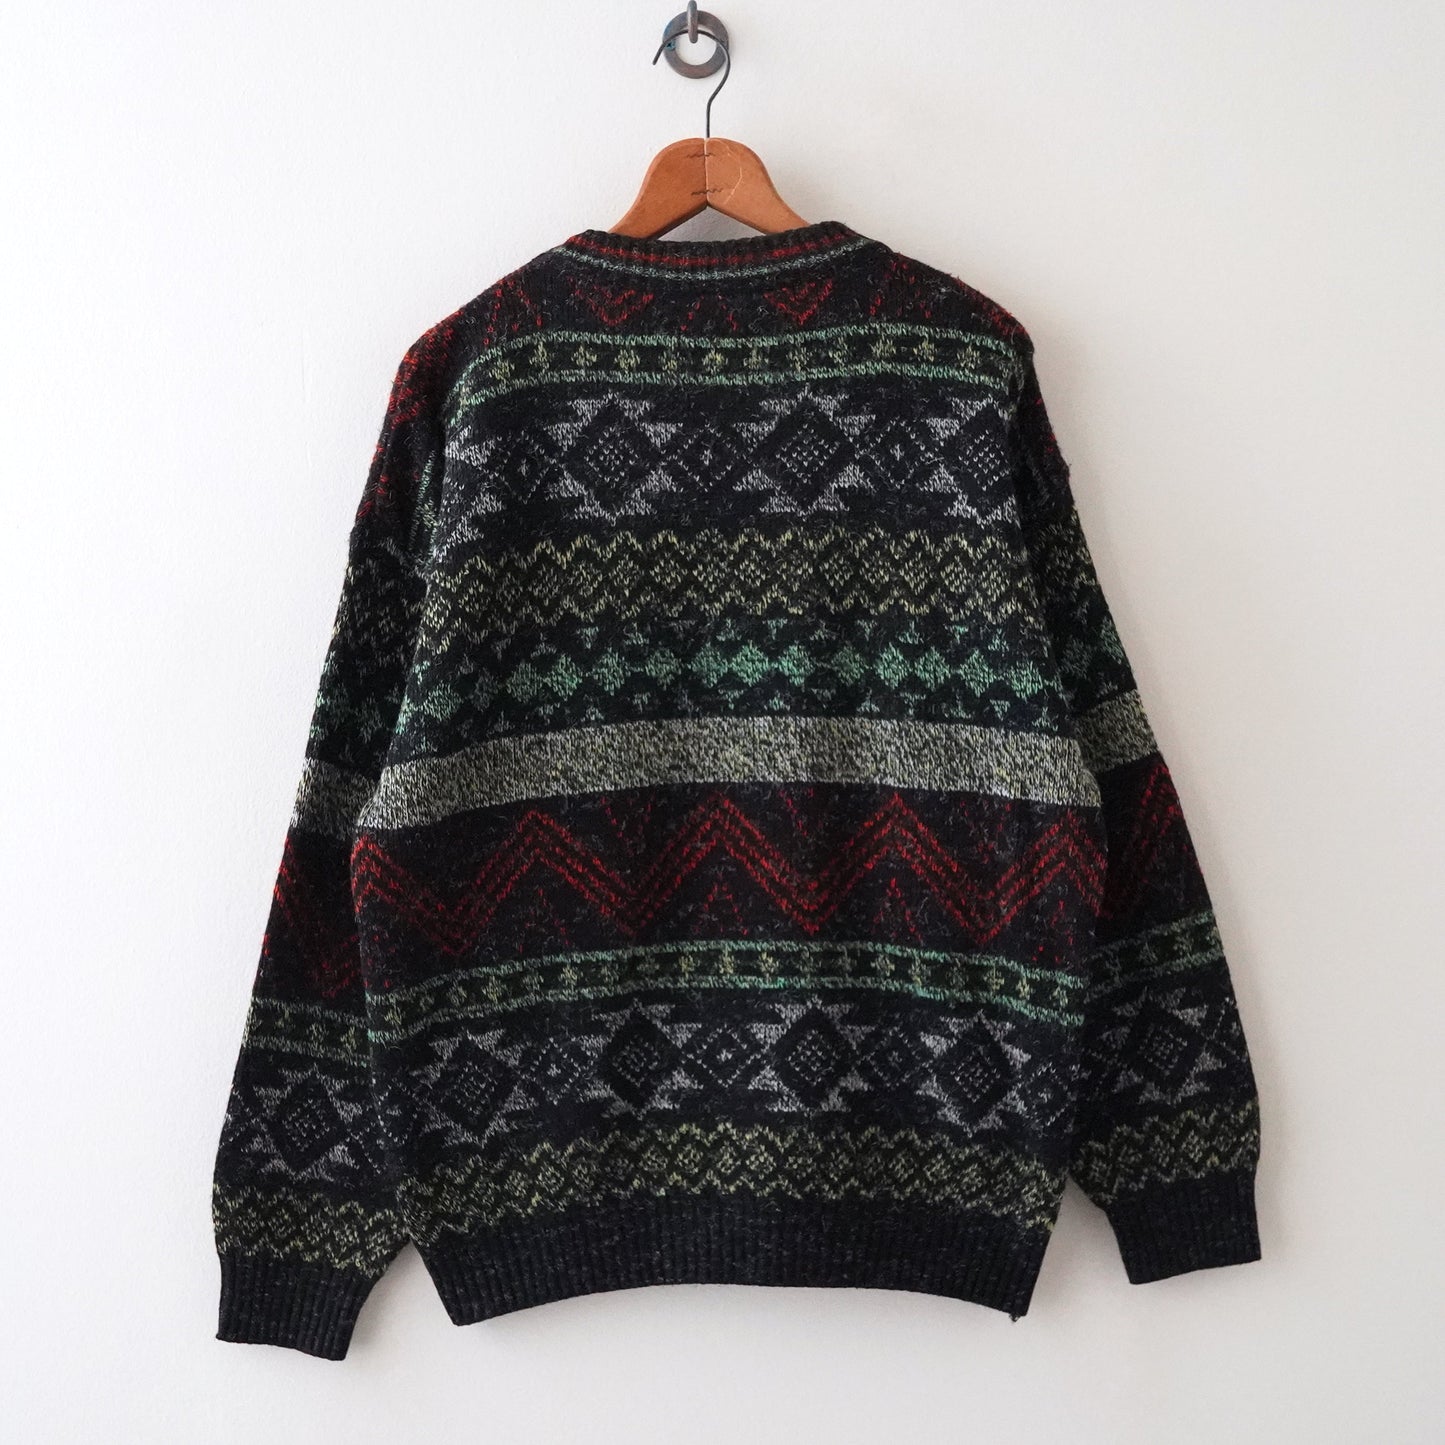 Colorful pattern knit